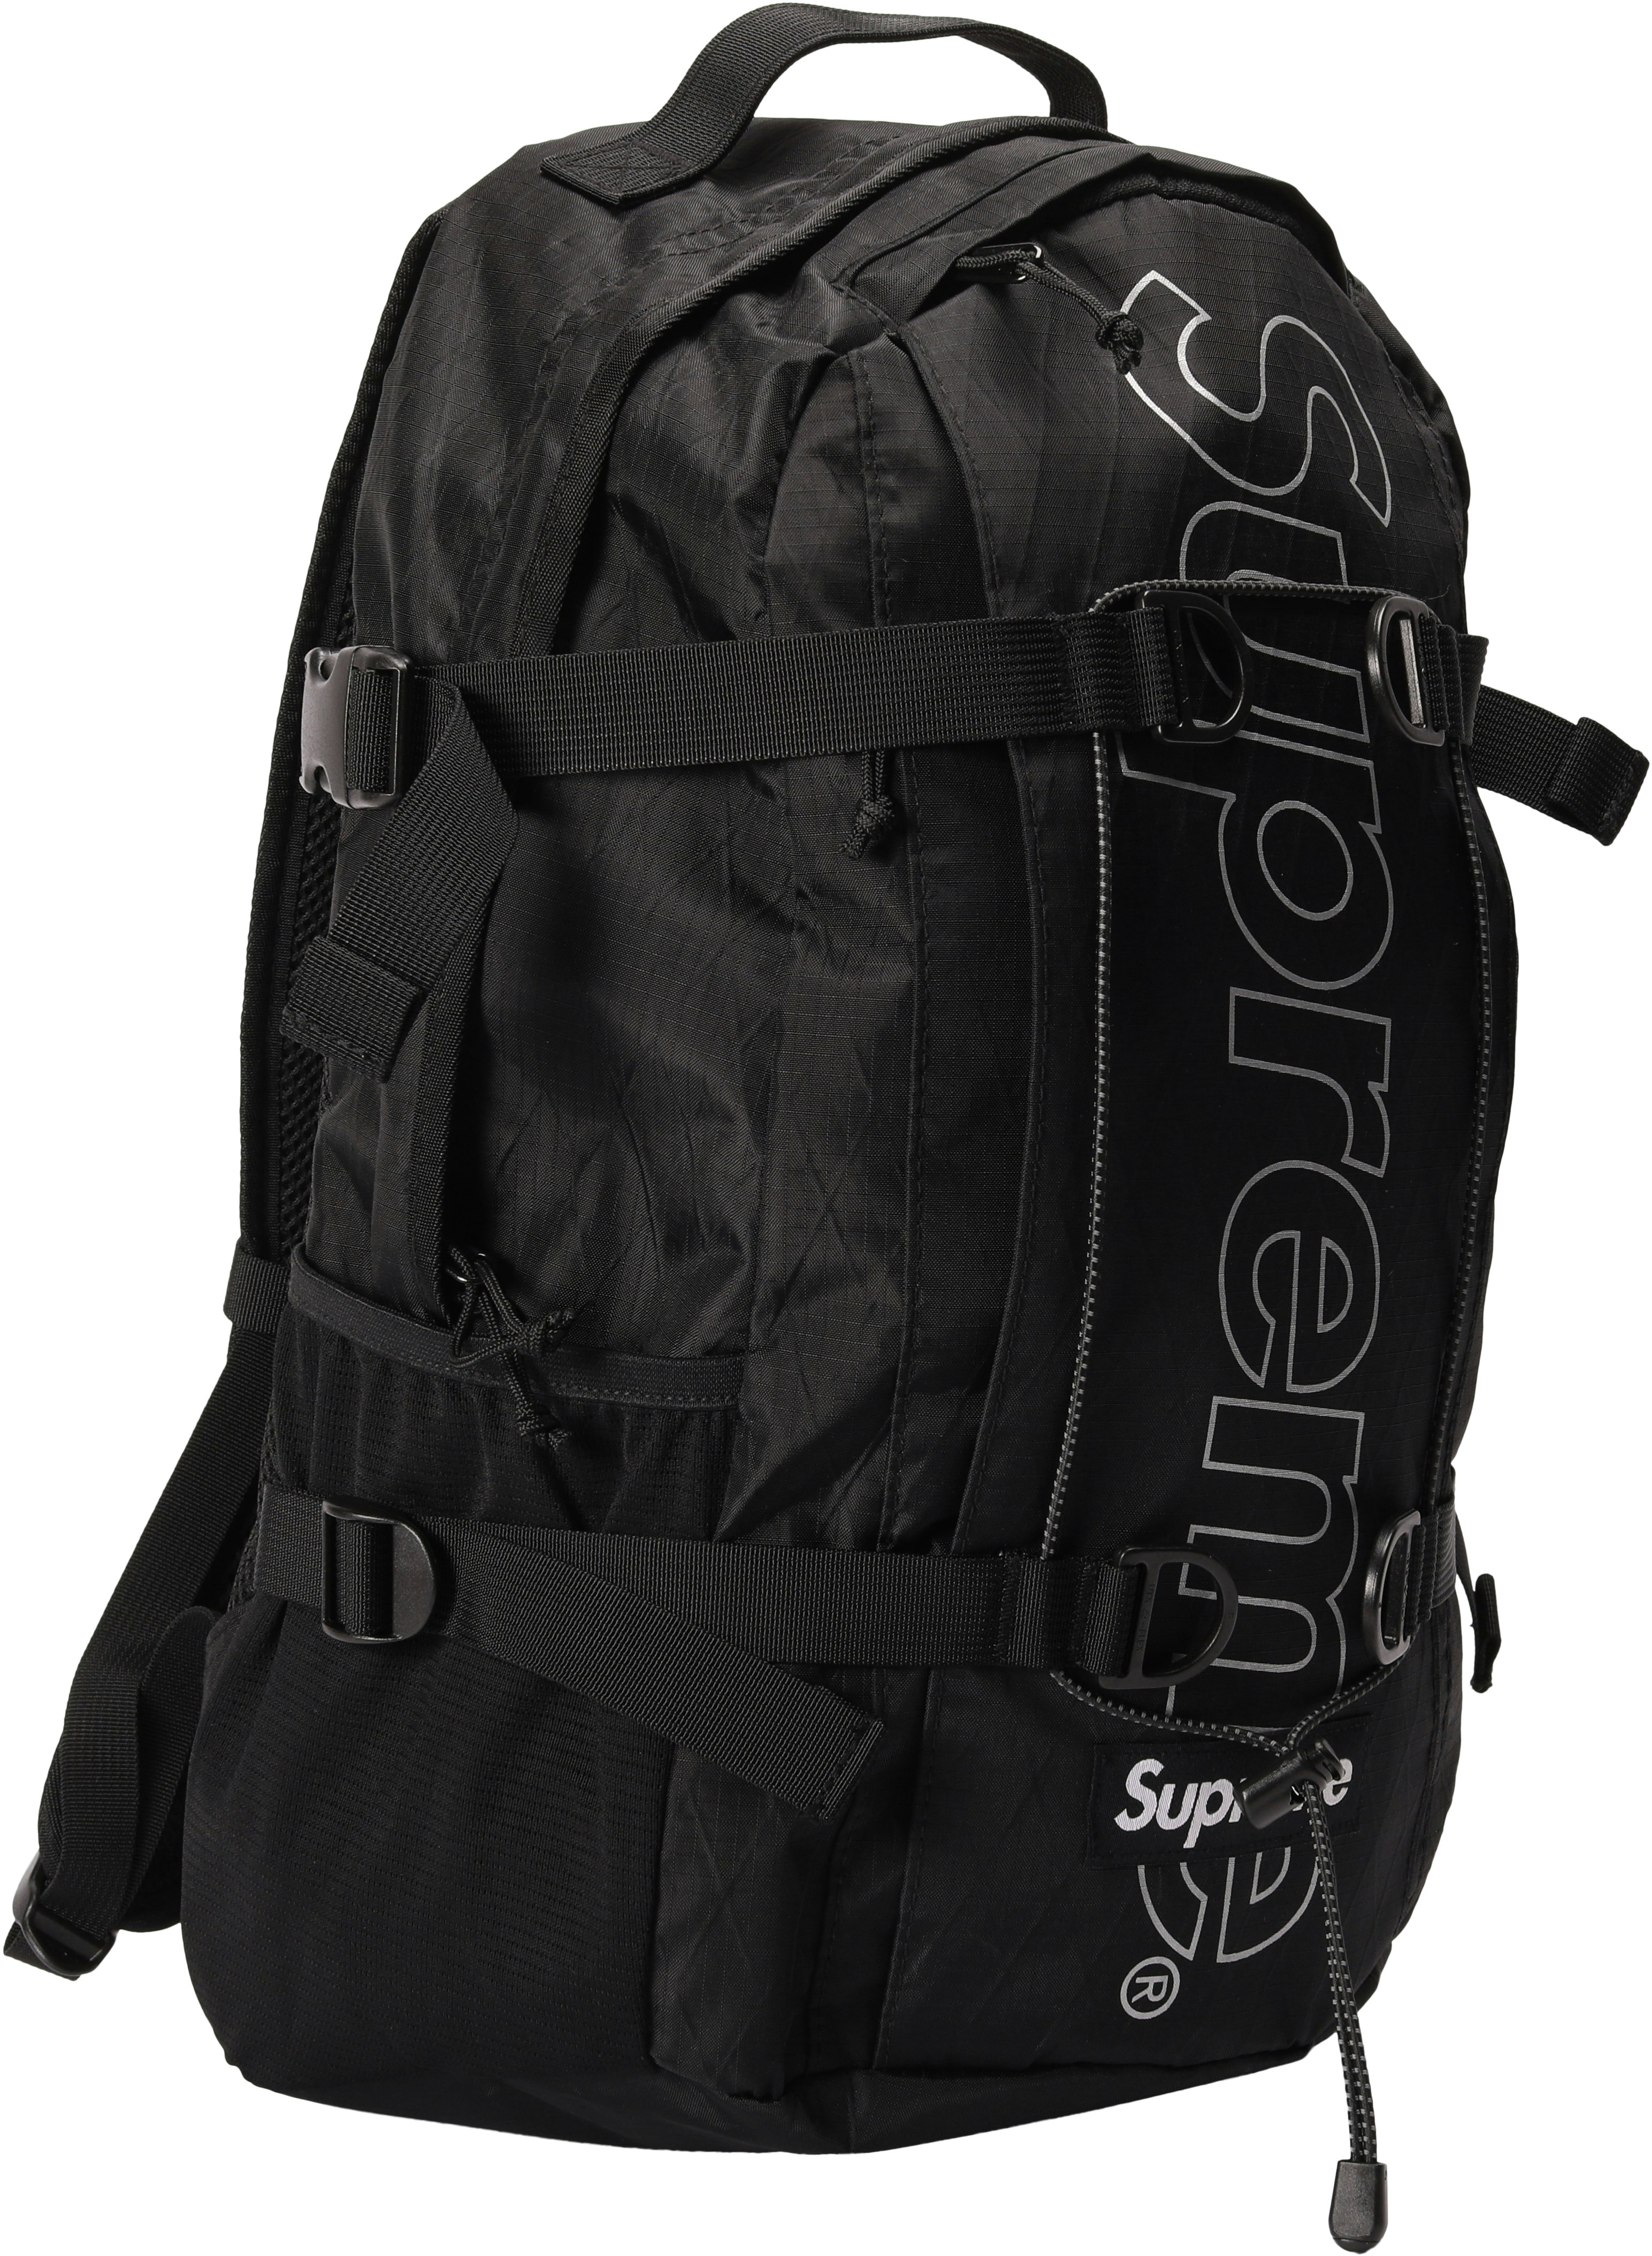 Supreme FW18 Backpack Black